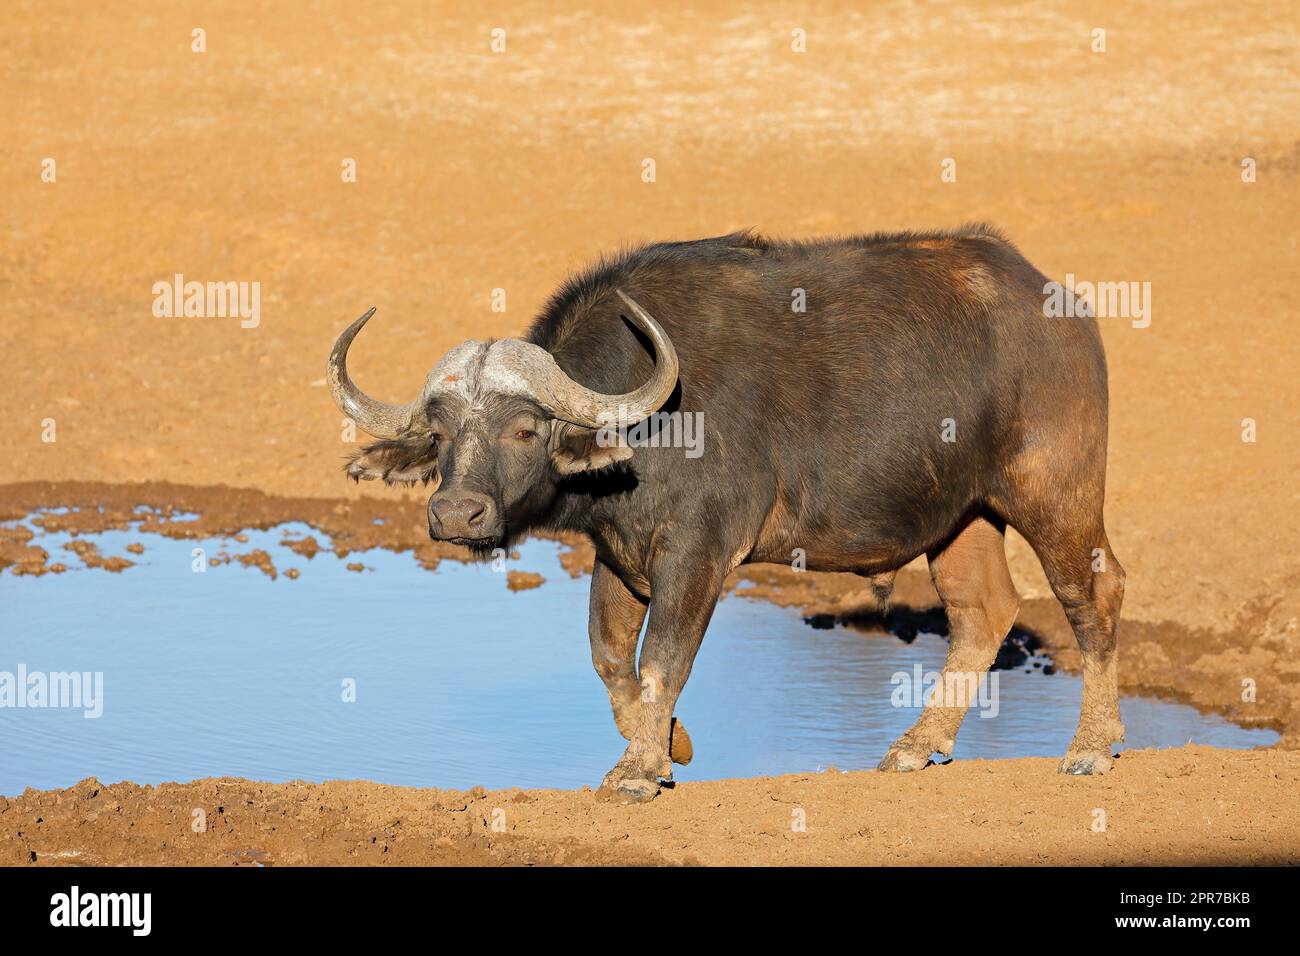 Bufalo africano in una buca d'acqua Foto Stock